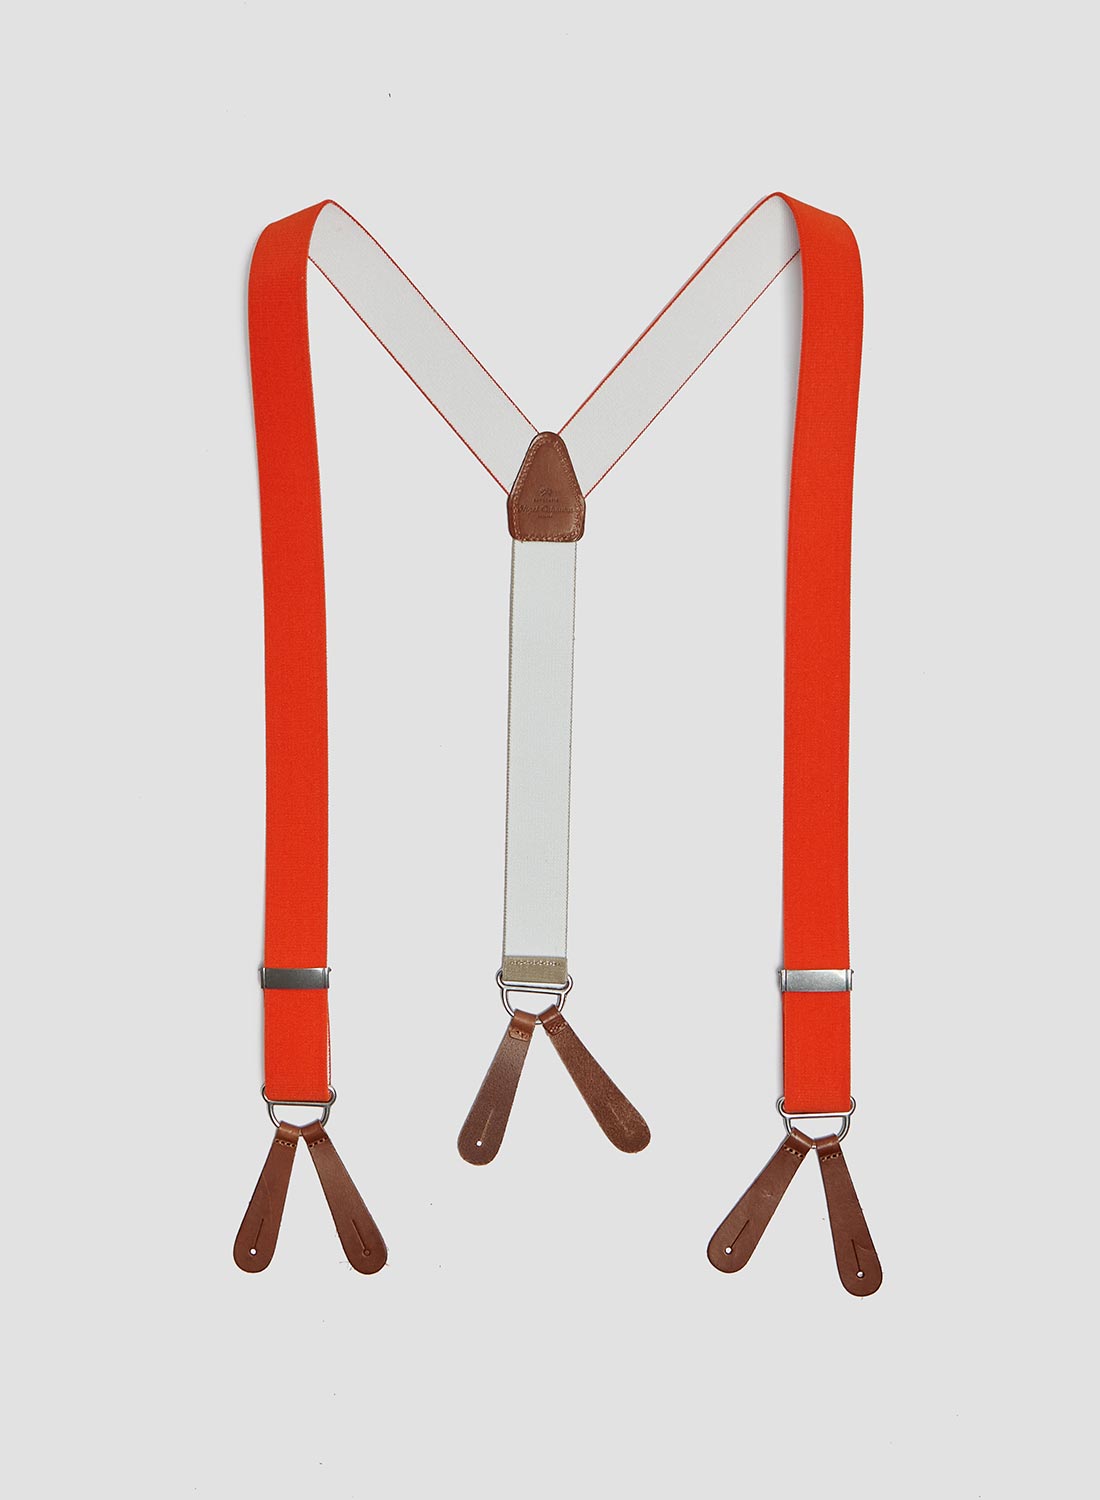 STIHL Orange Arborist Chainsaw Trouser Braces Clips 110cm for sale online   eBay